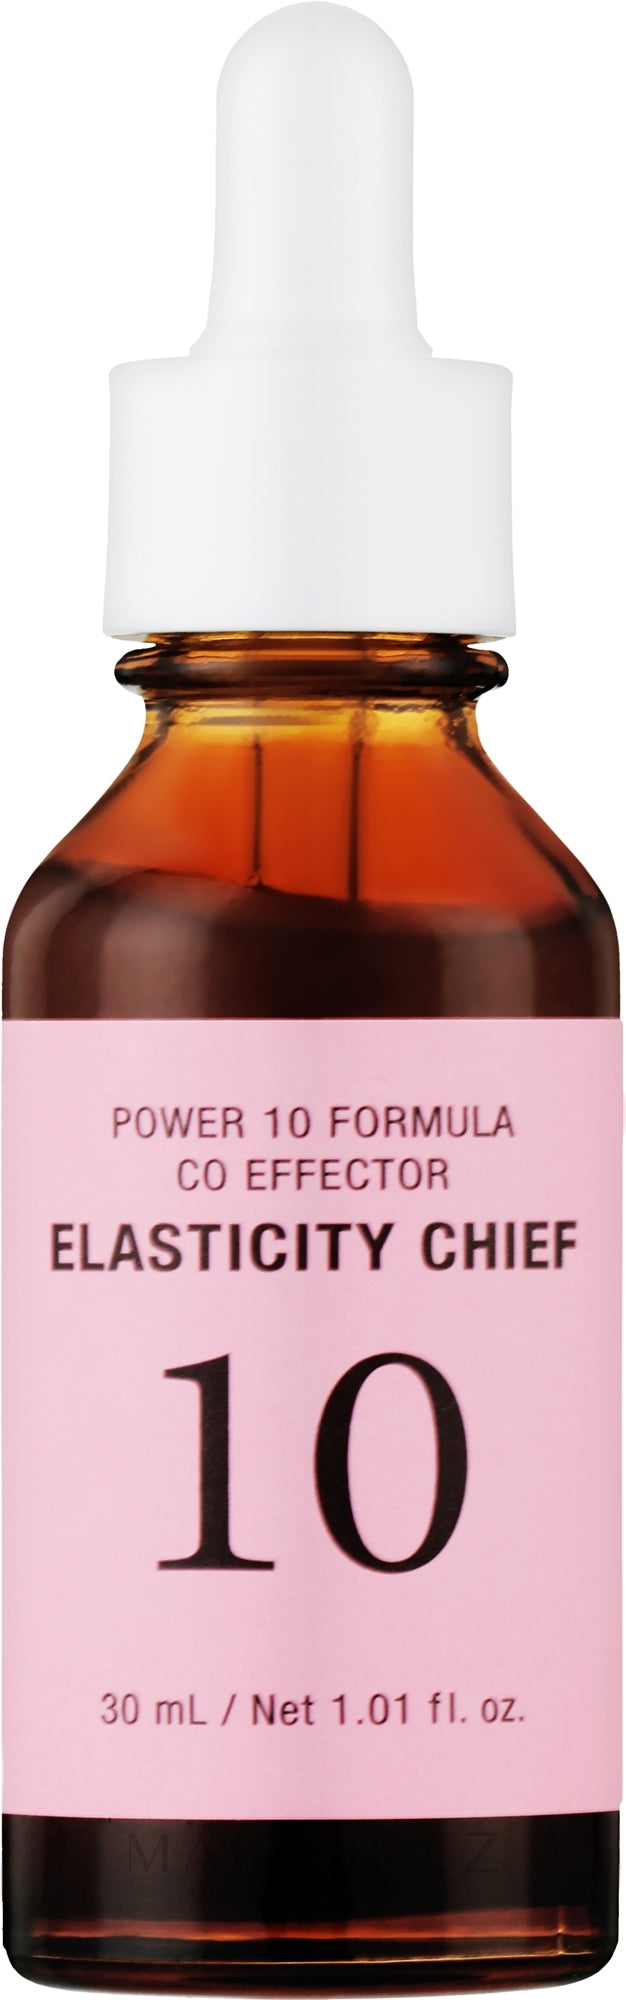 ITSSKIN Power 10 Formula CO Effector "Elasticity Chief"